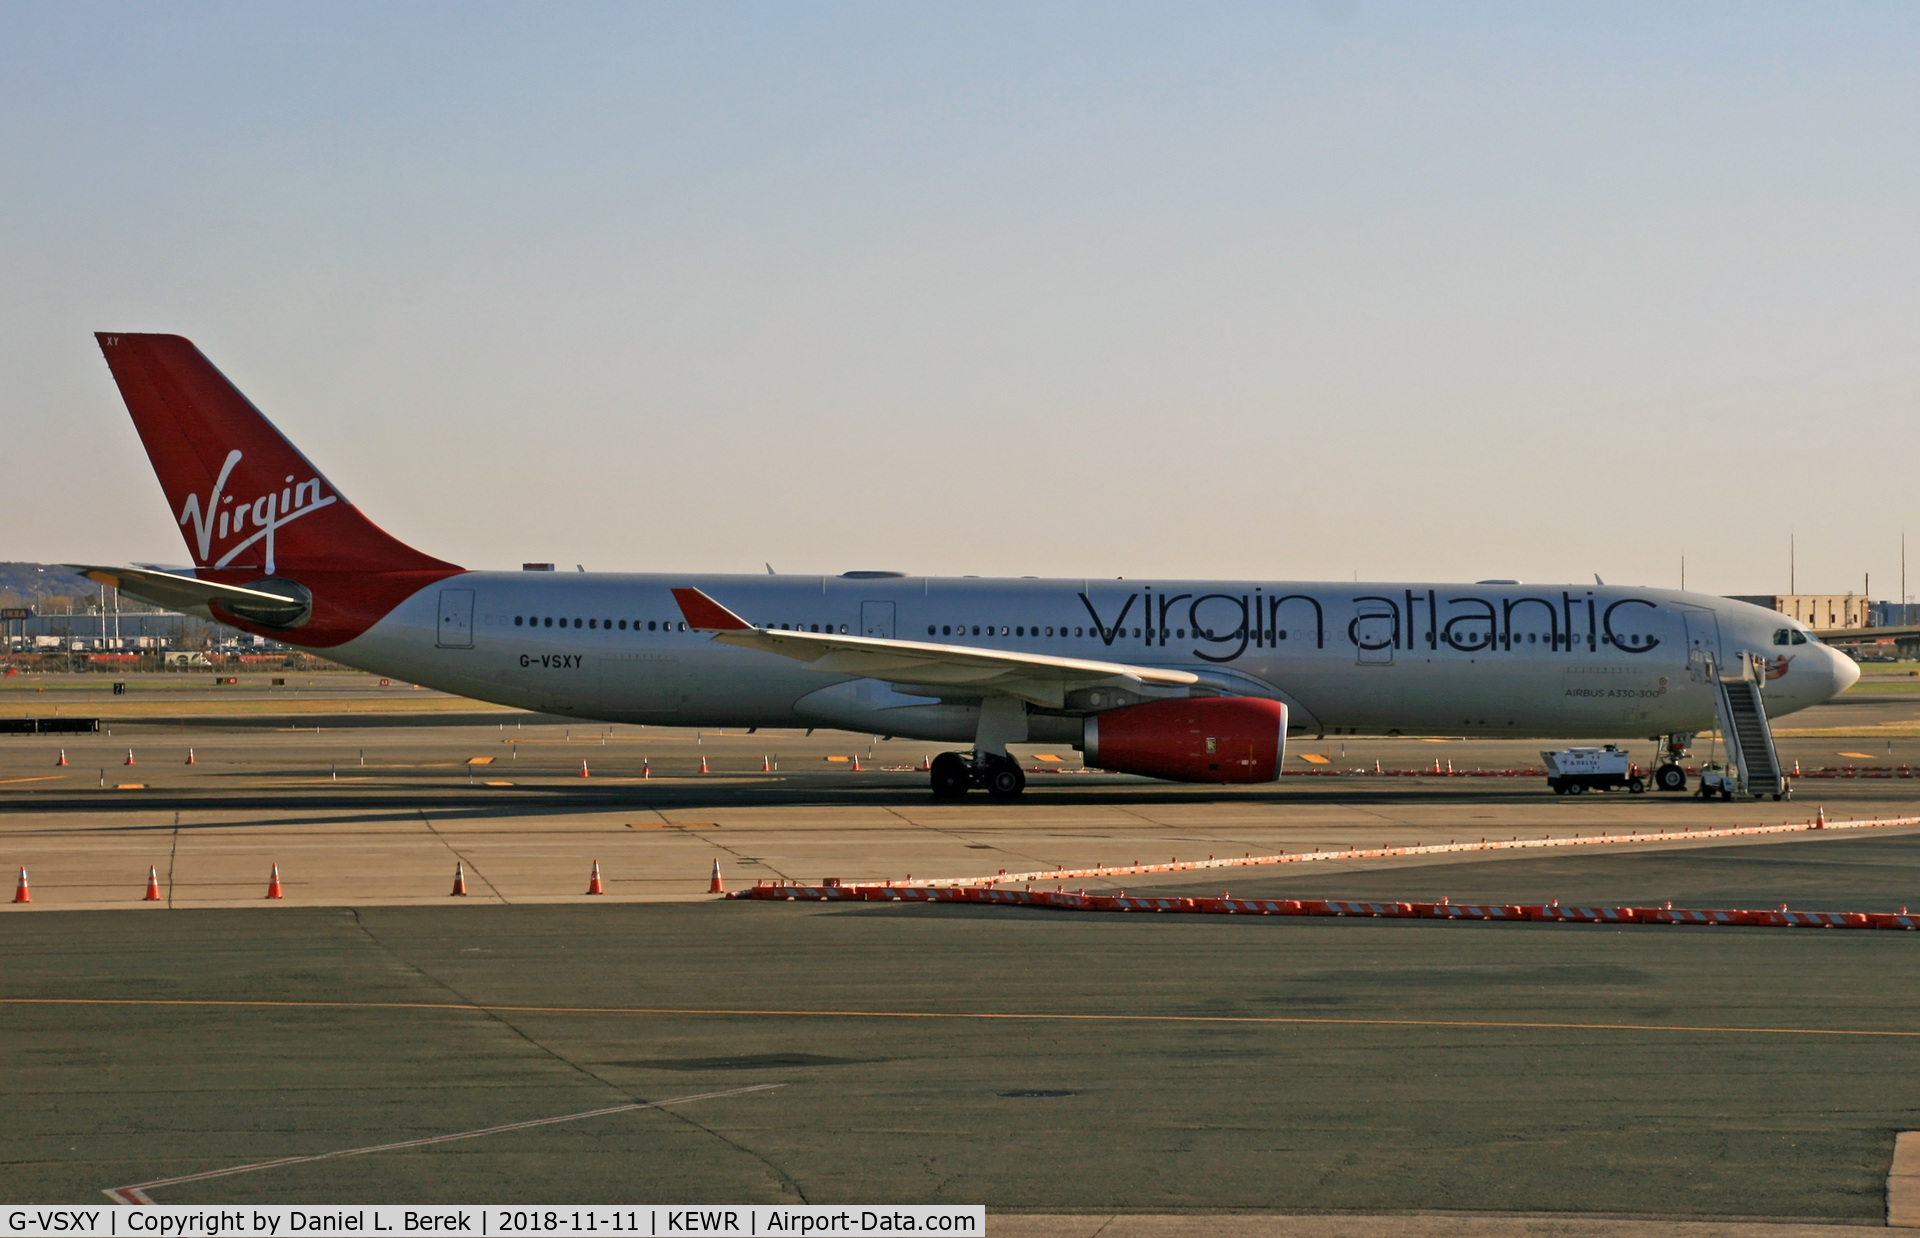 G-VSXY, 2010 Airbus A330-343X C/N 1195, A Virgin Atlantic A330 awaits her return journey home.